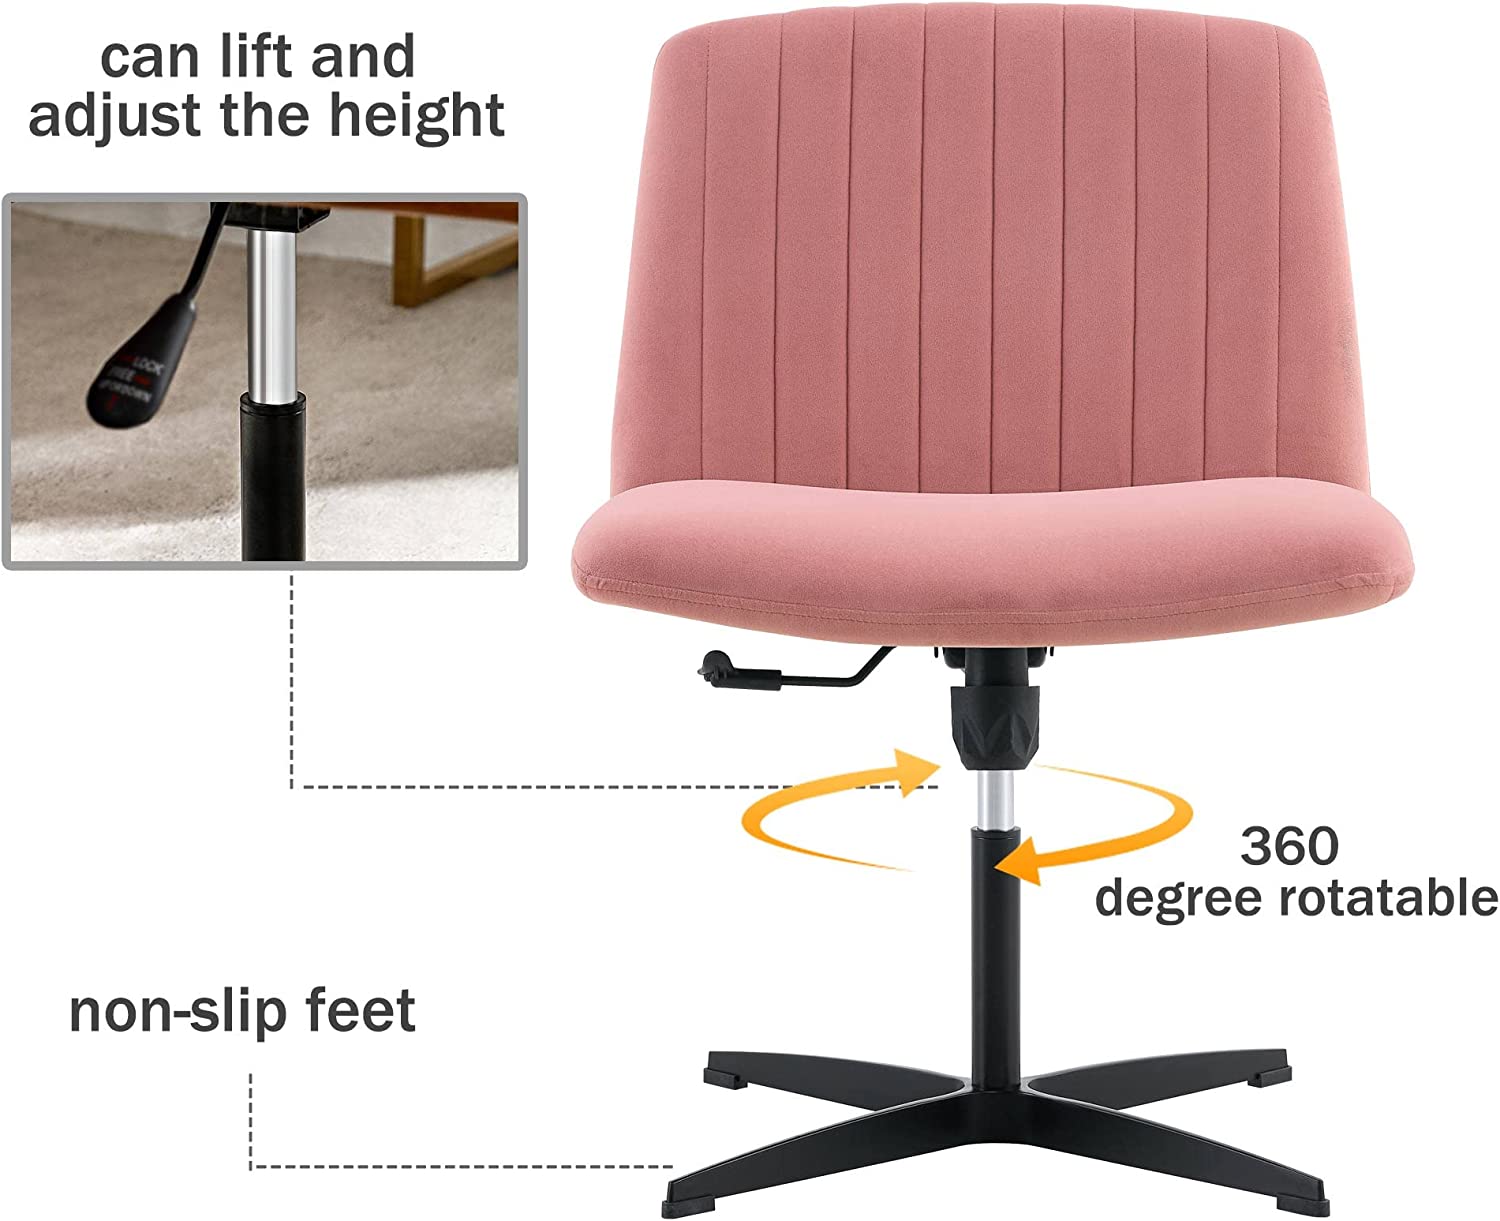 YaFiti Cross Legged Office Chair Armless Office Desk Chair No